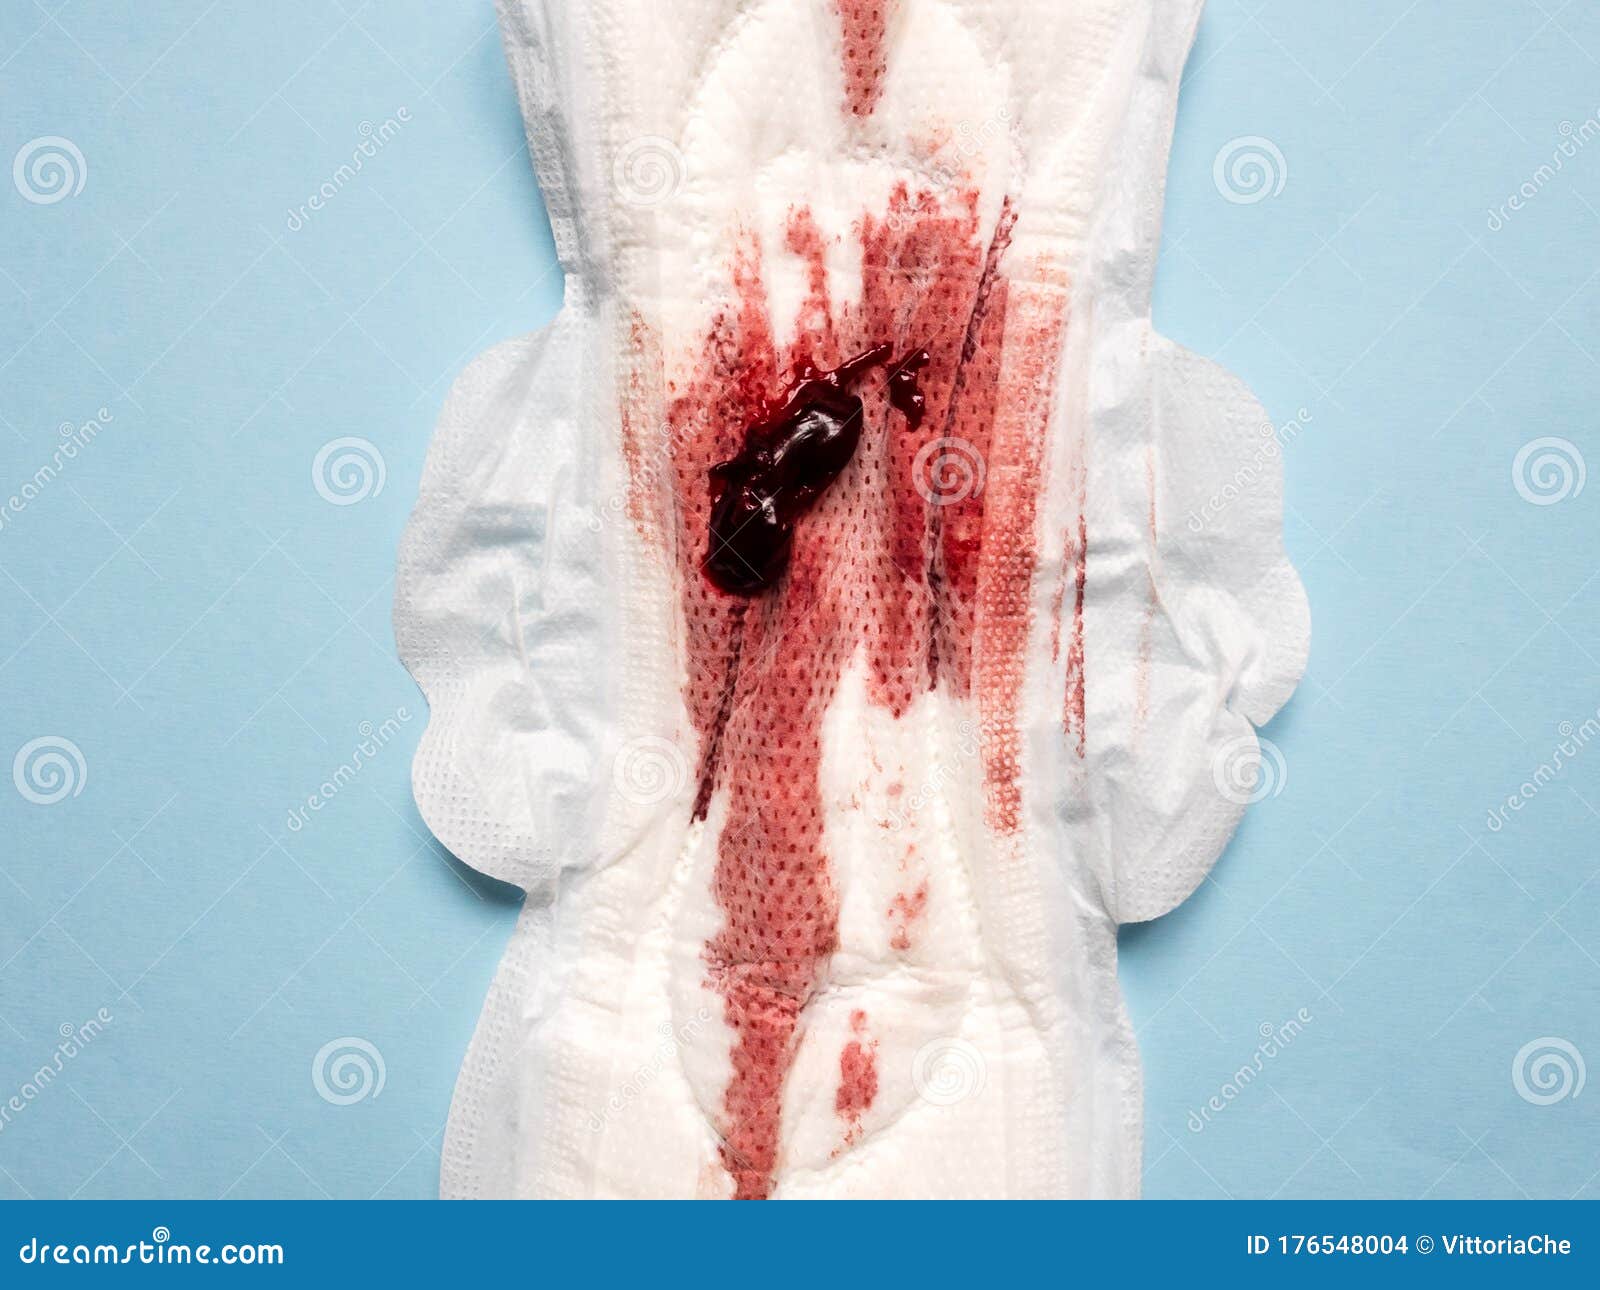 Symptom of Endometriosis, Menstrual Blood with Blood Clots on a Sanitary  Pad, Close Up Image Stock Photo - Image of medicine, endometriosis:  176548004